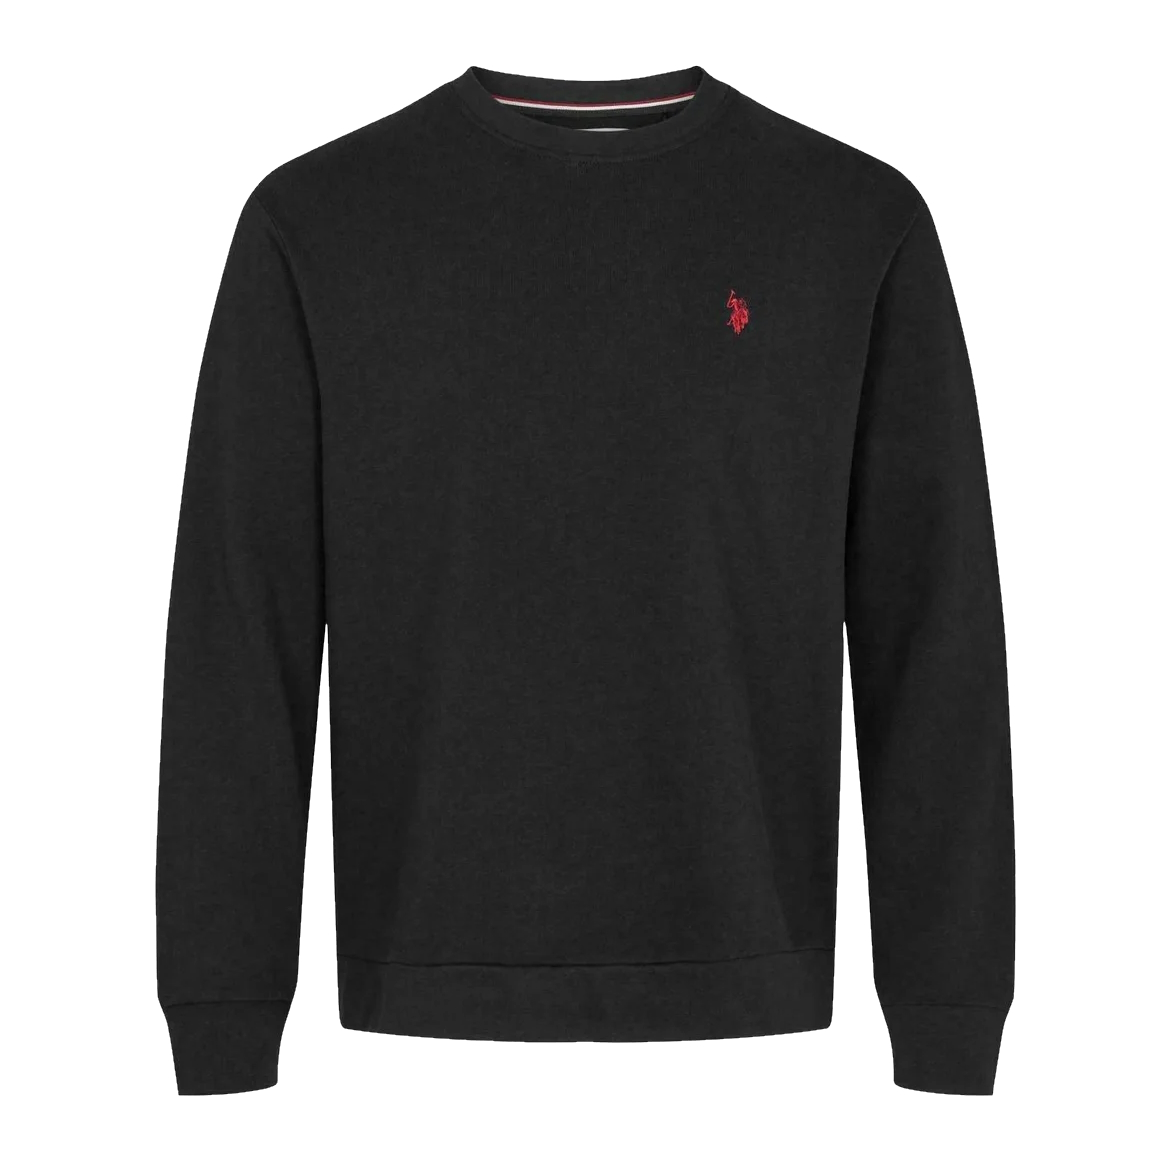 Se US Polo Adler Sweatshirt sort - XL hos Fashionhero.dk